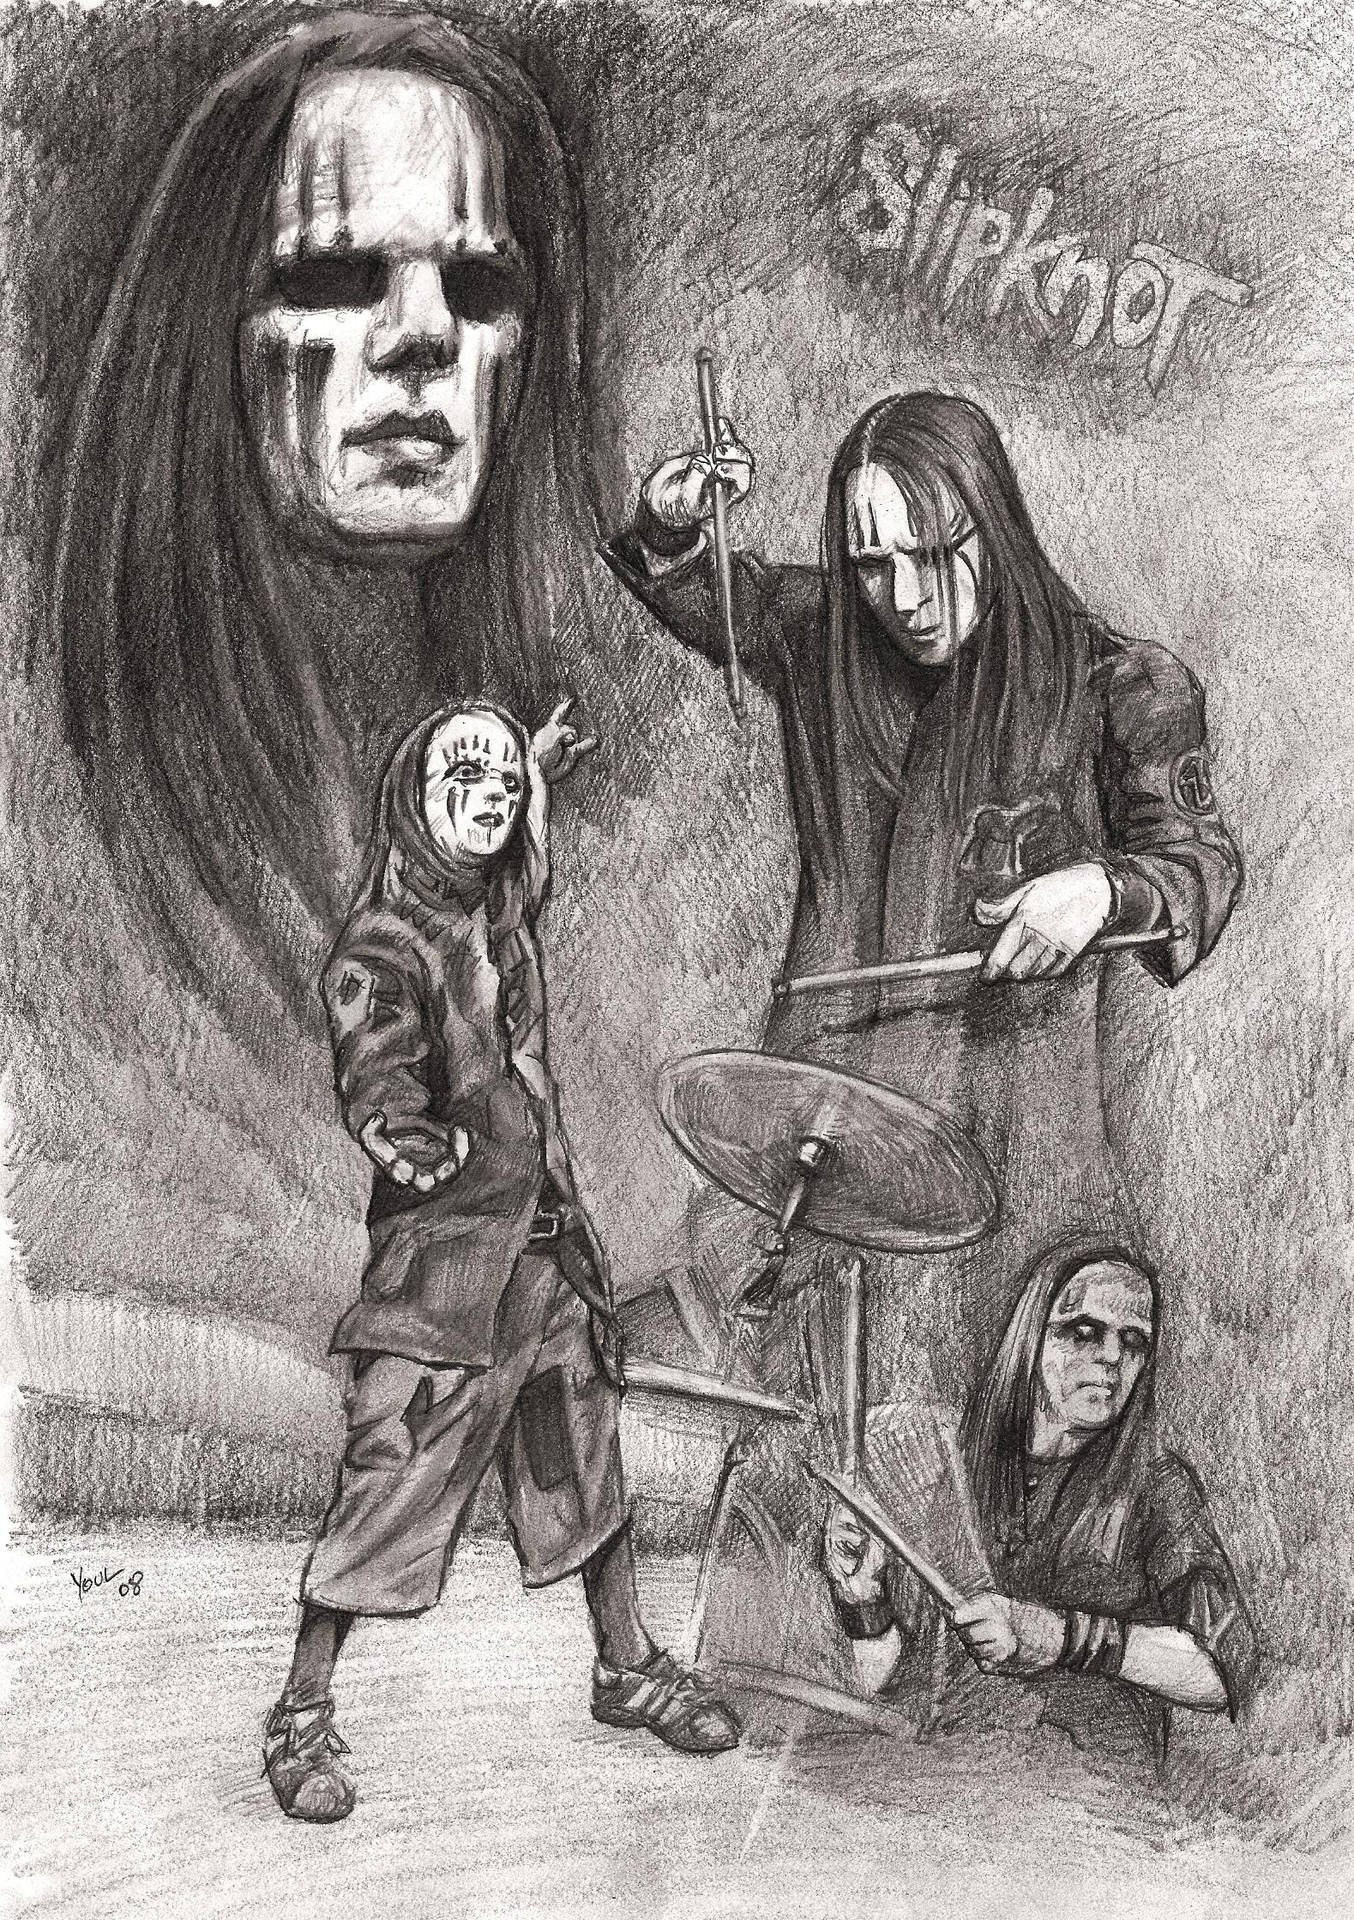 North of Winter  RIP Joey Jordison Slipknot dummer by  Facebook